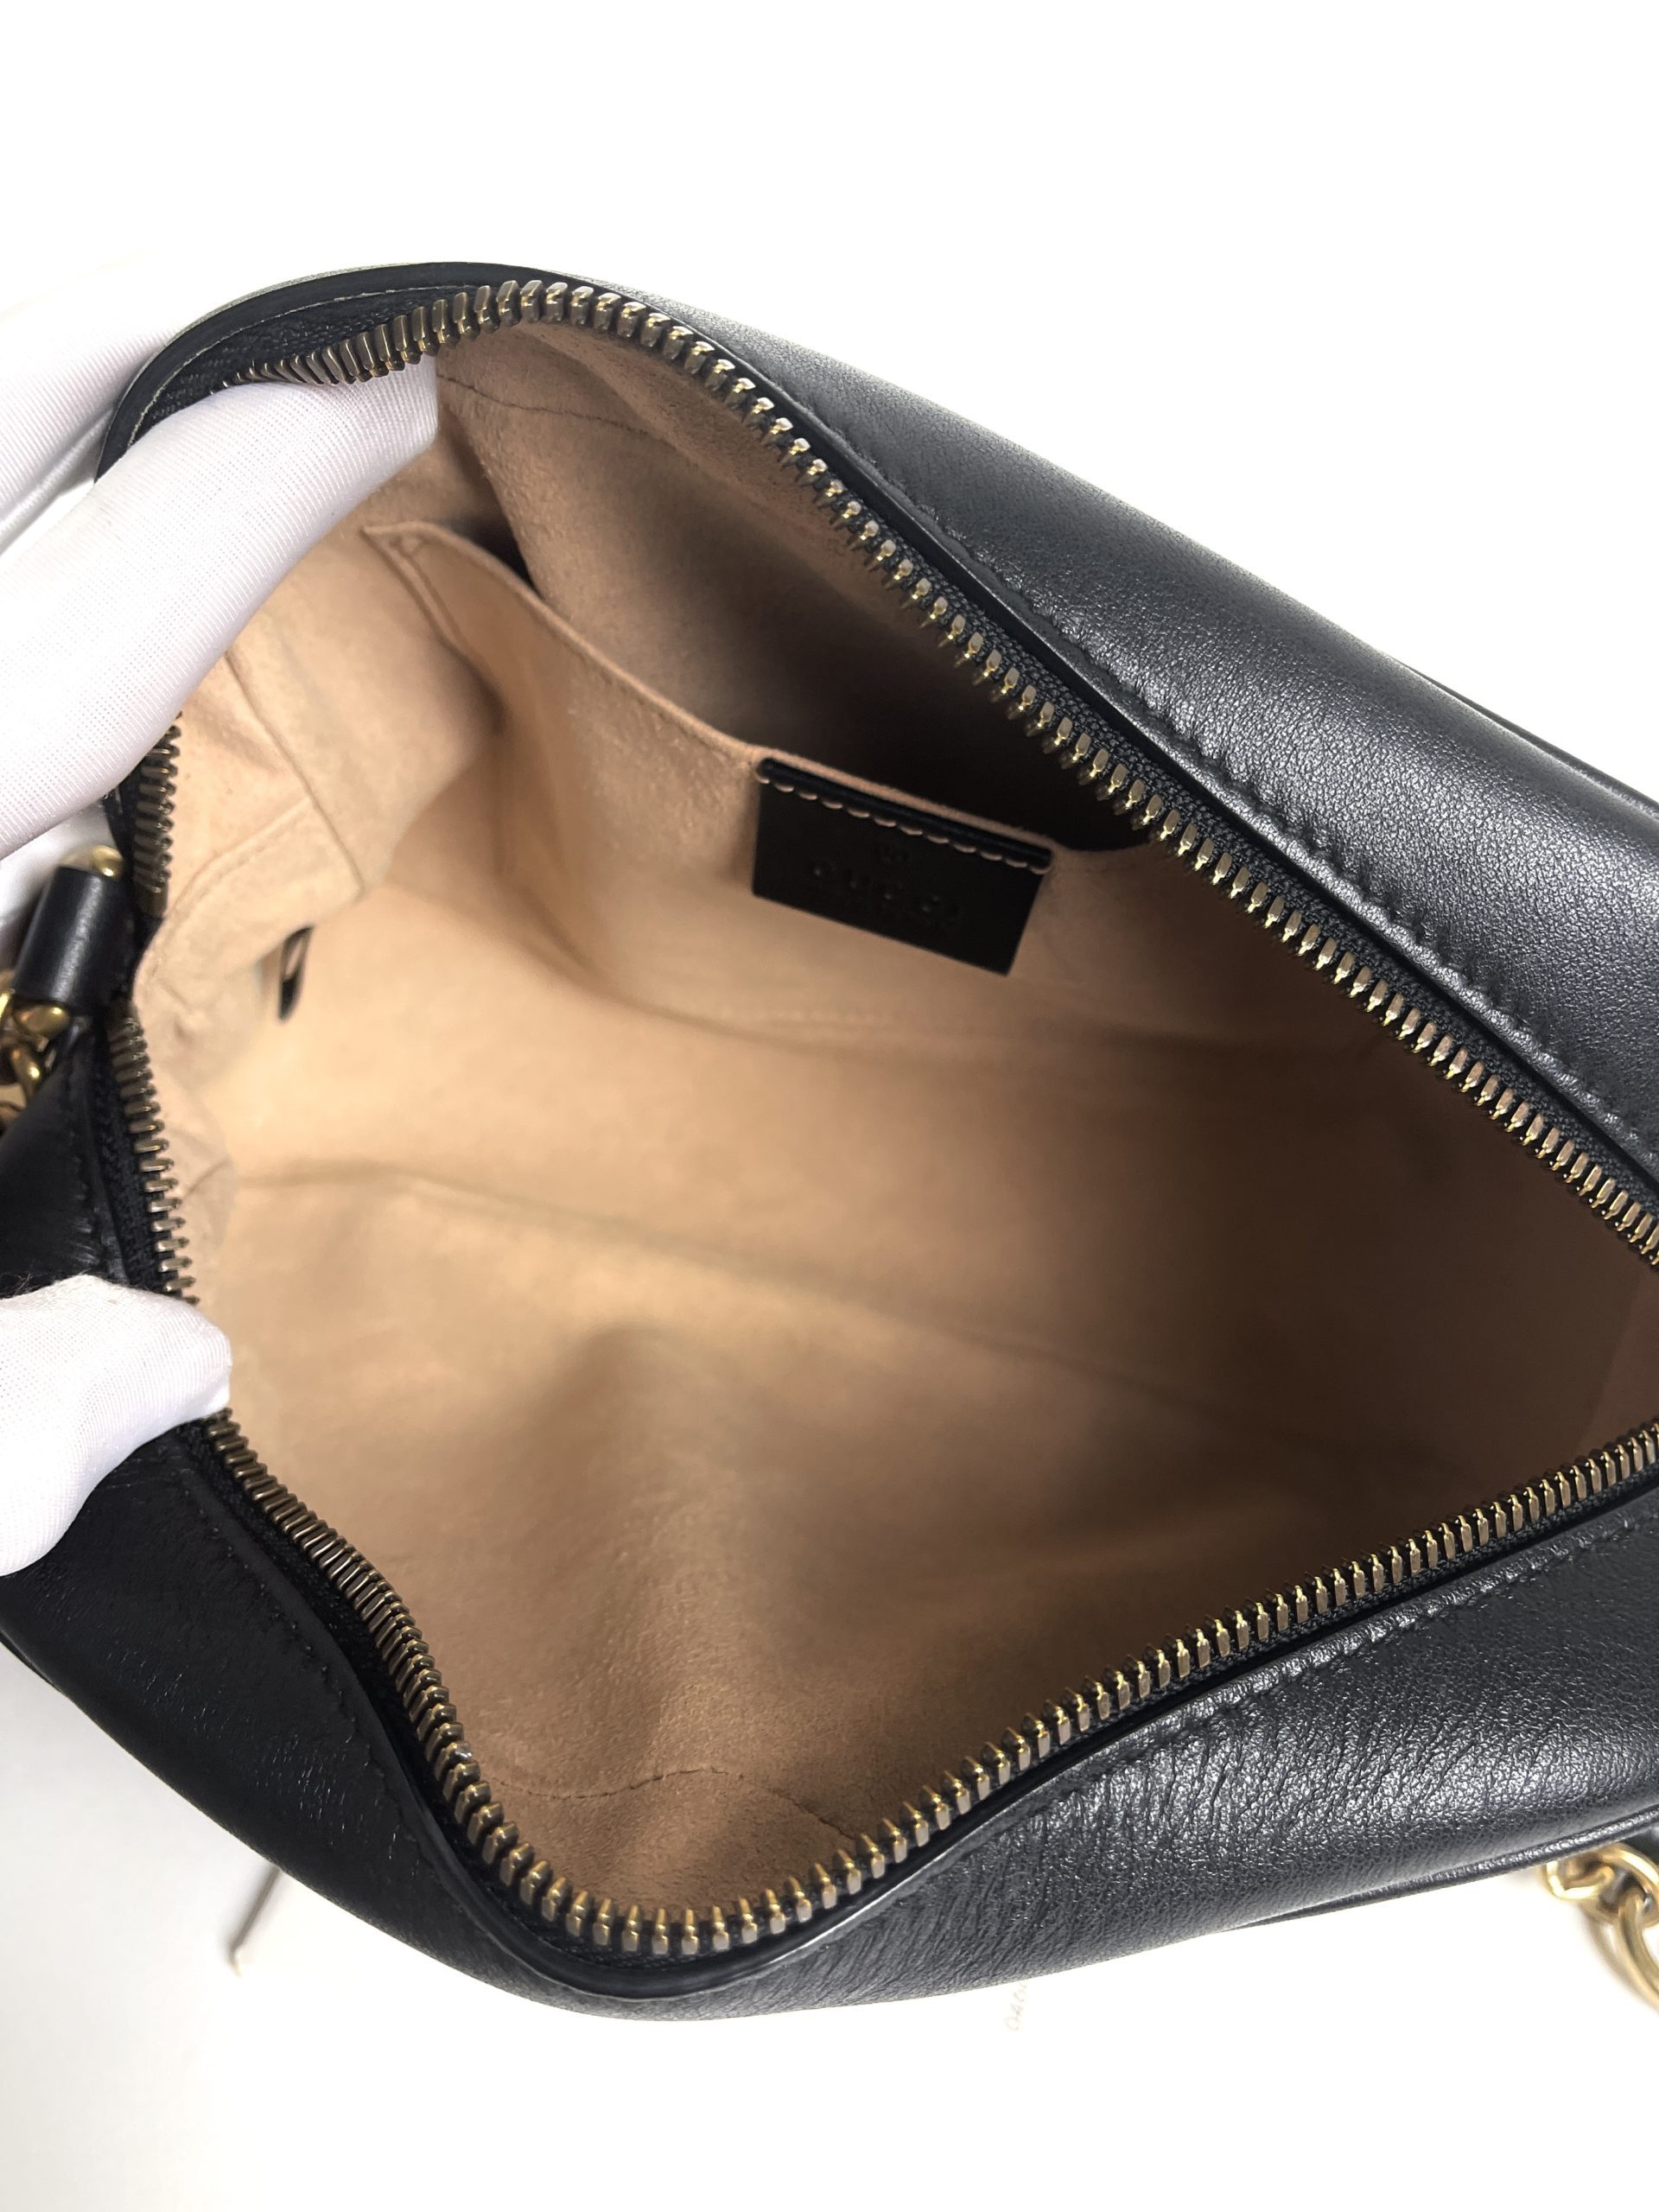 Gucci GG Marmont Matelassé Chevron Leather Shoulder Bag in Brown